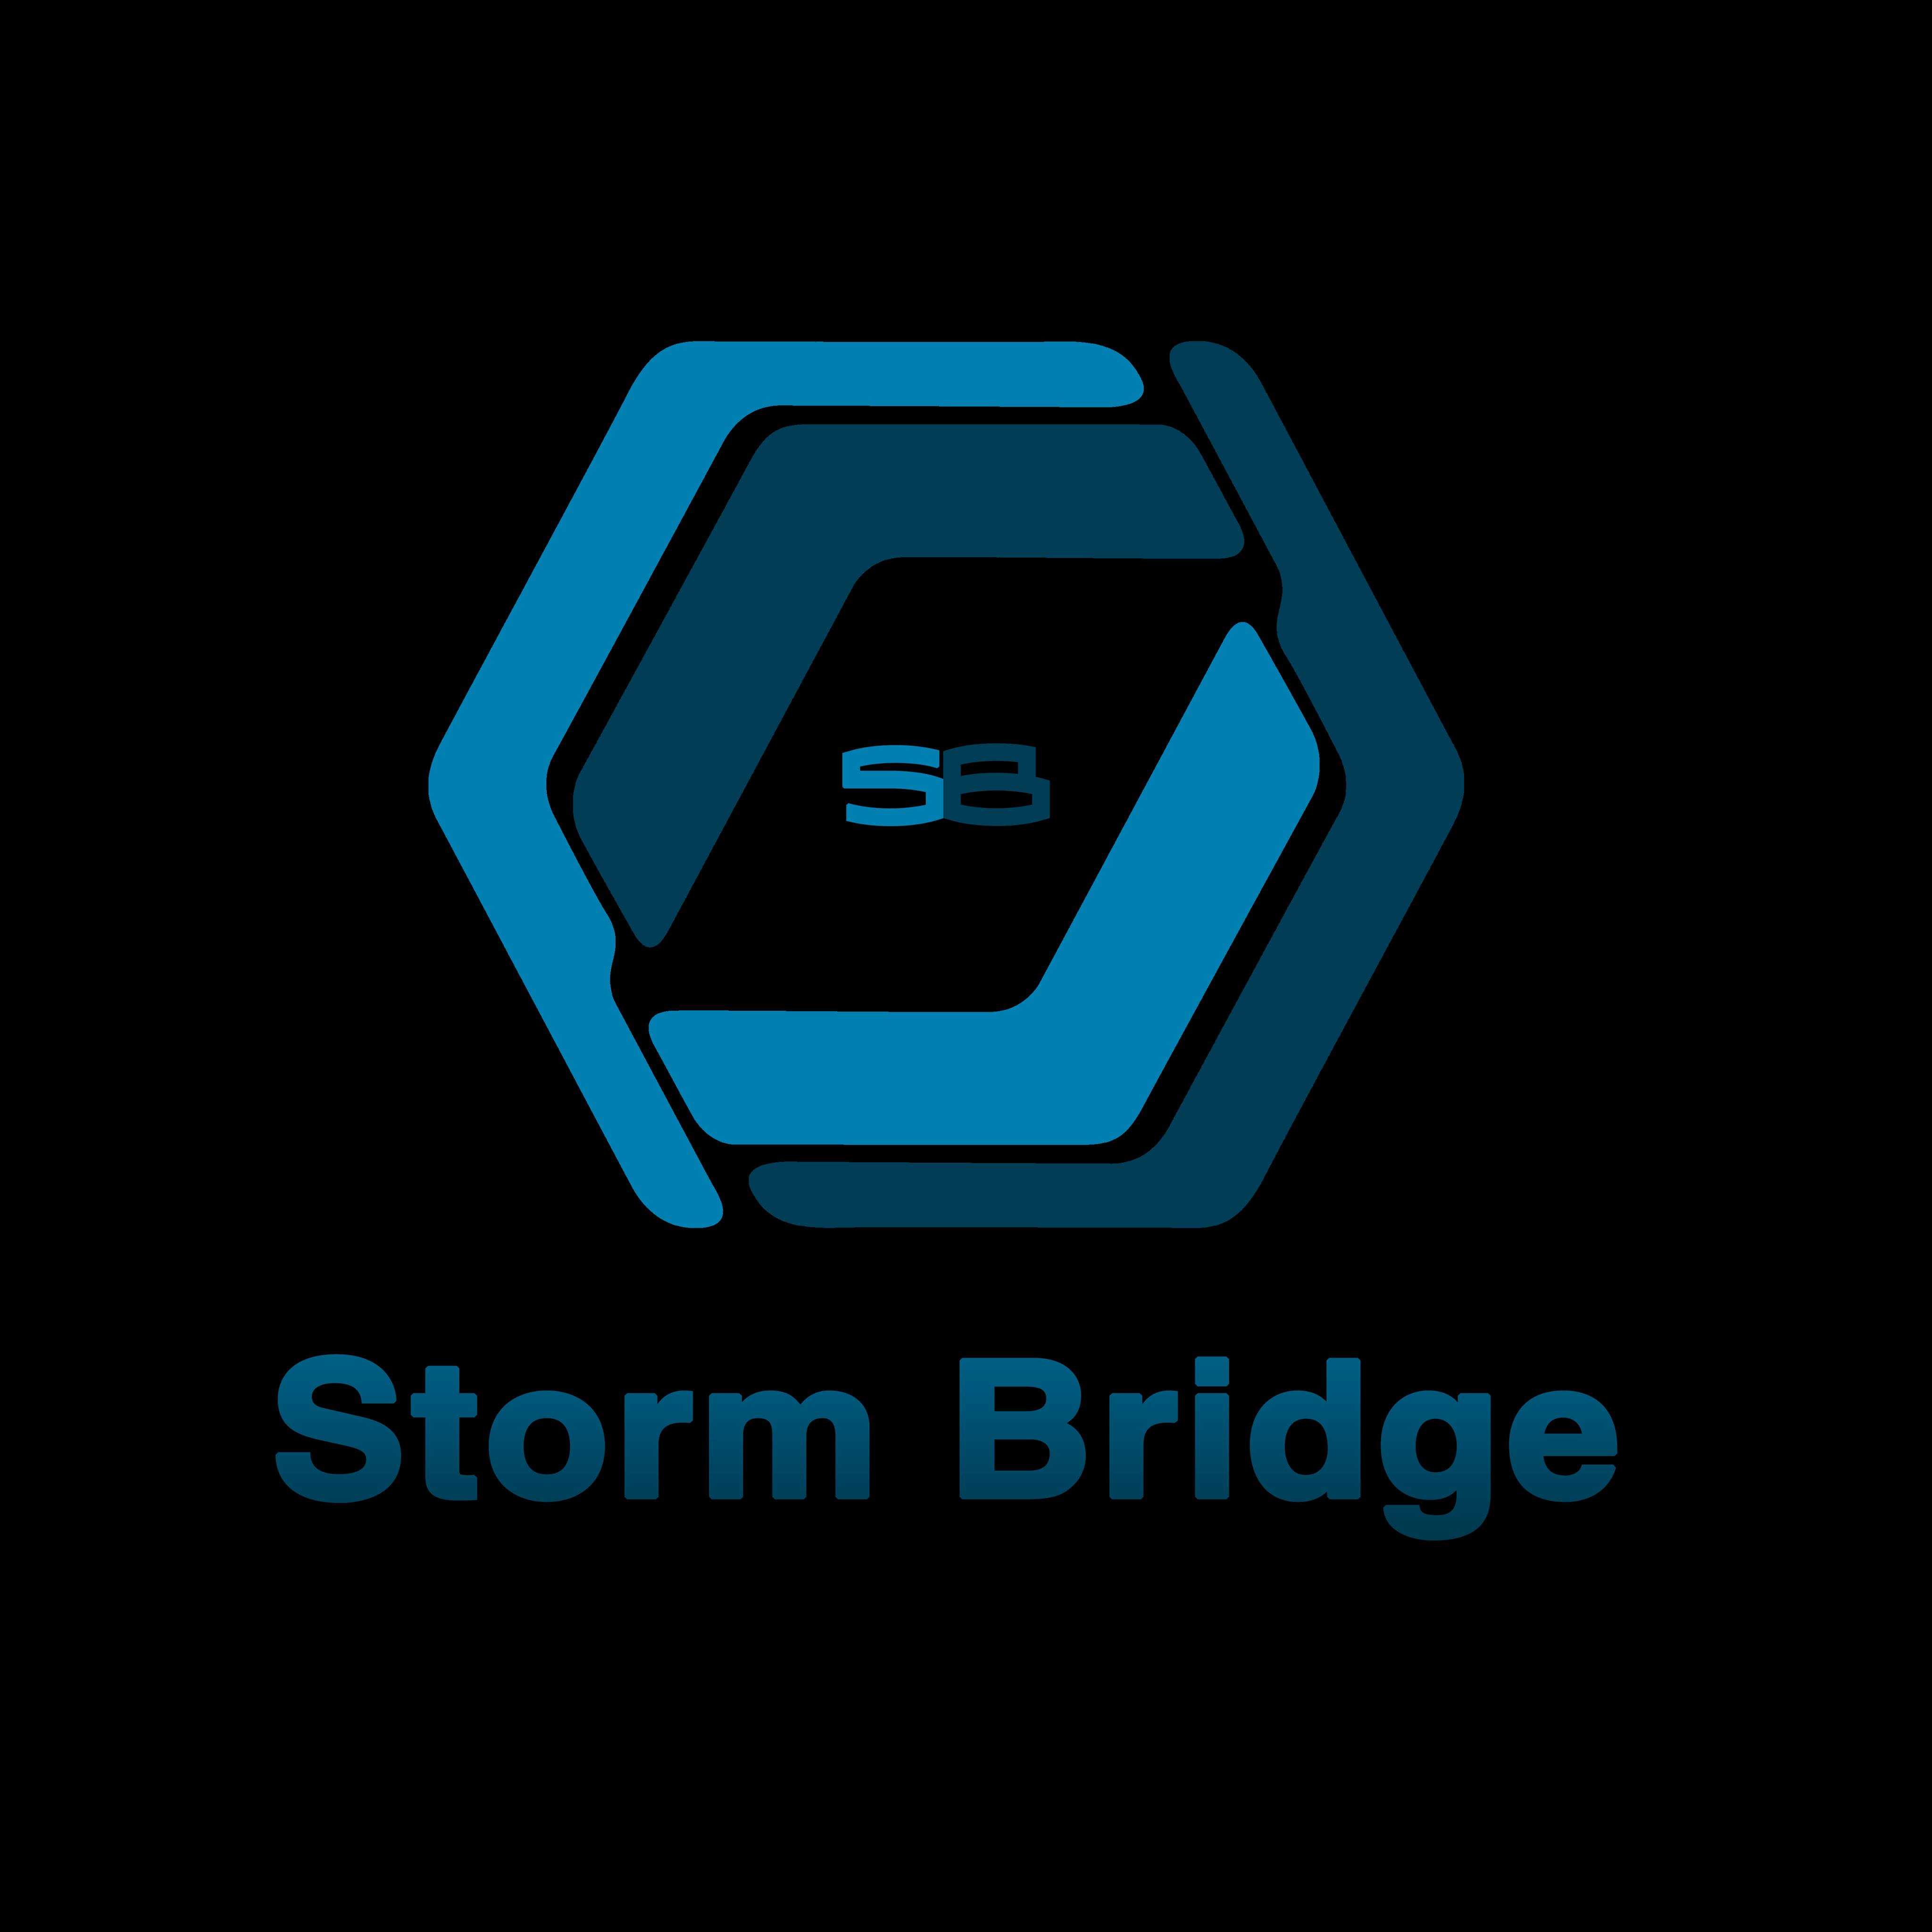 https://www.pakpositions.com/company/storm-bridge